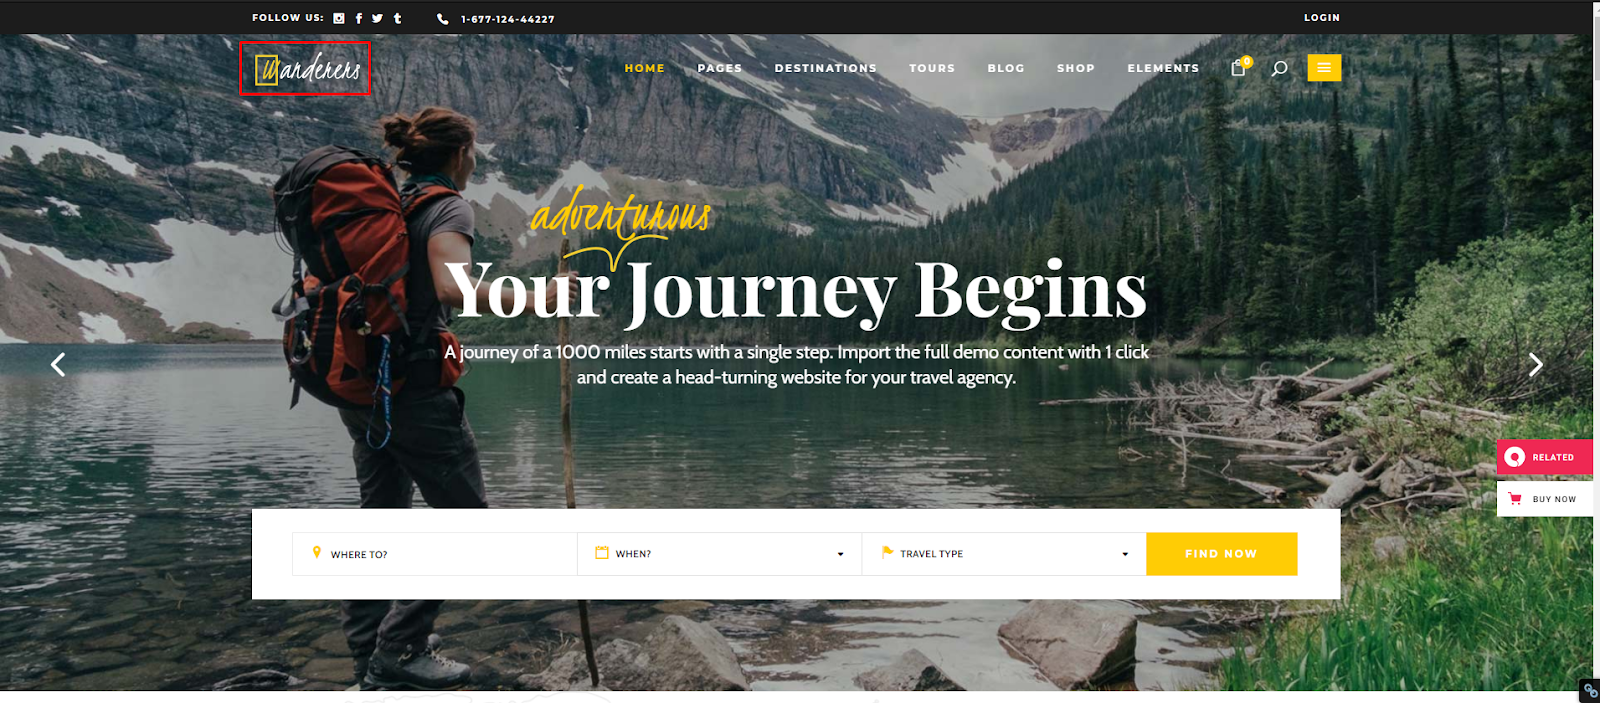 Wanderers - Adventure Tourism and Travel WordPress Theme